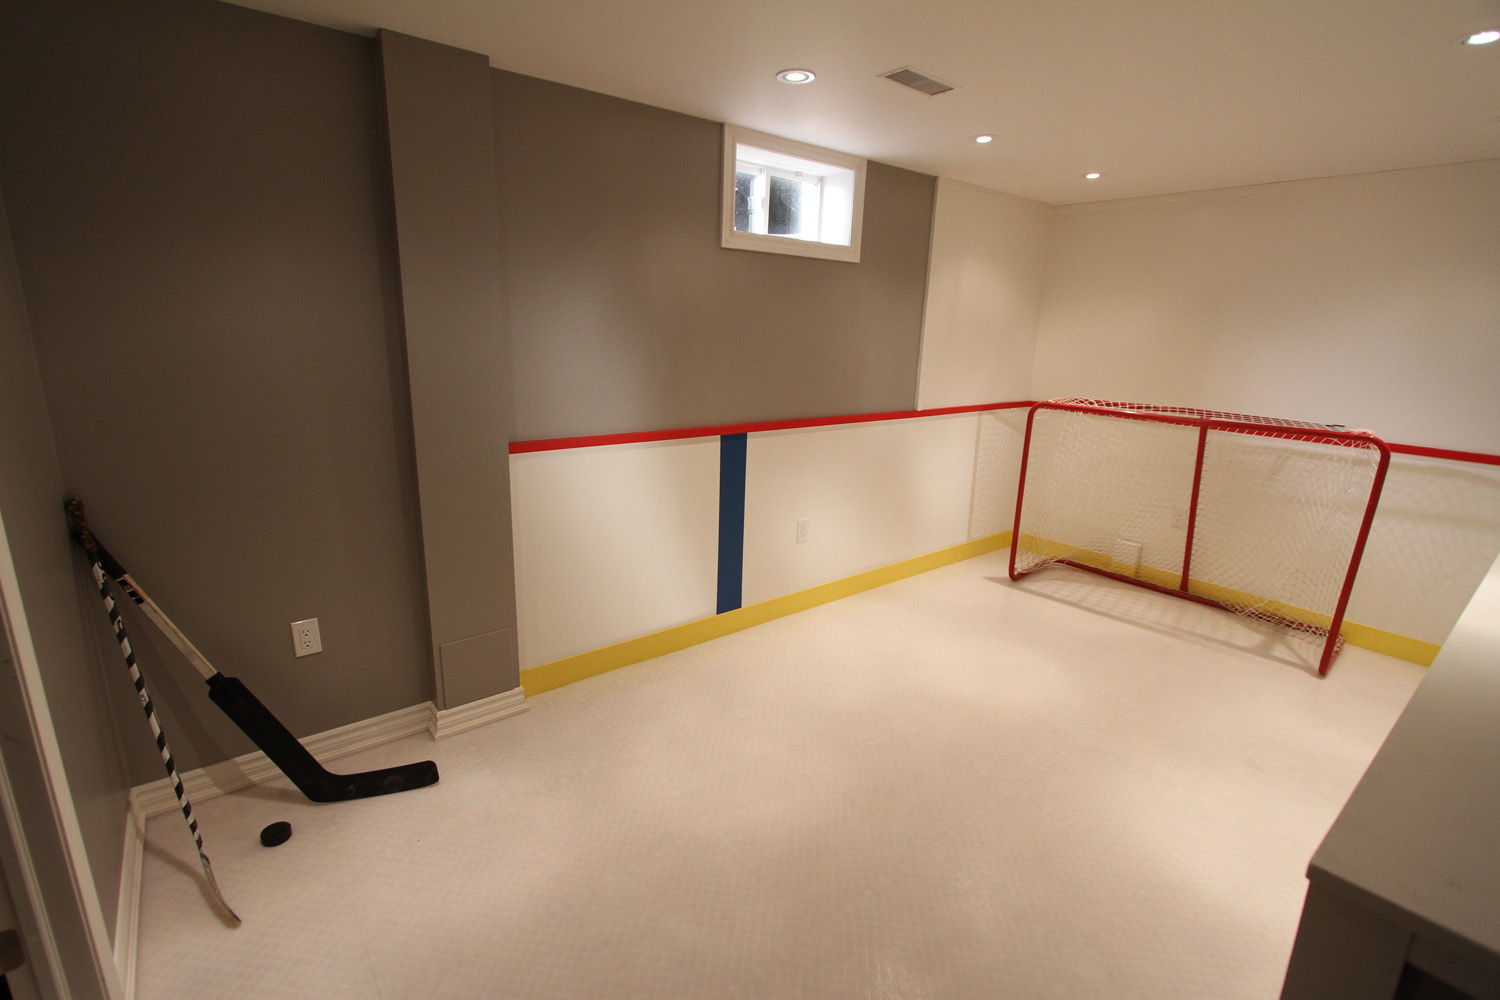 Hockey rink in basement